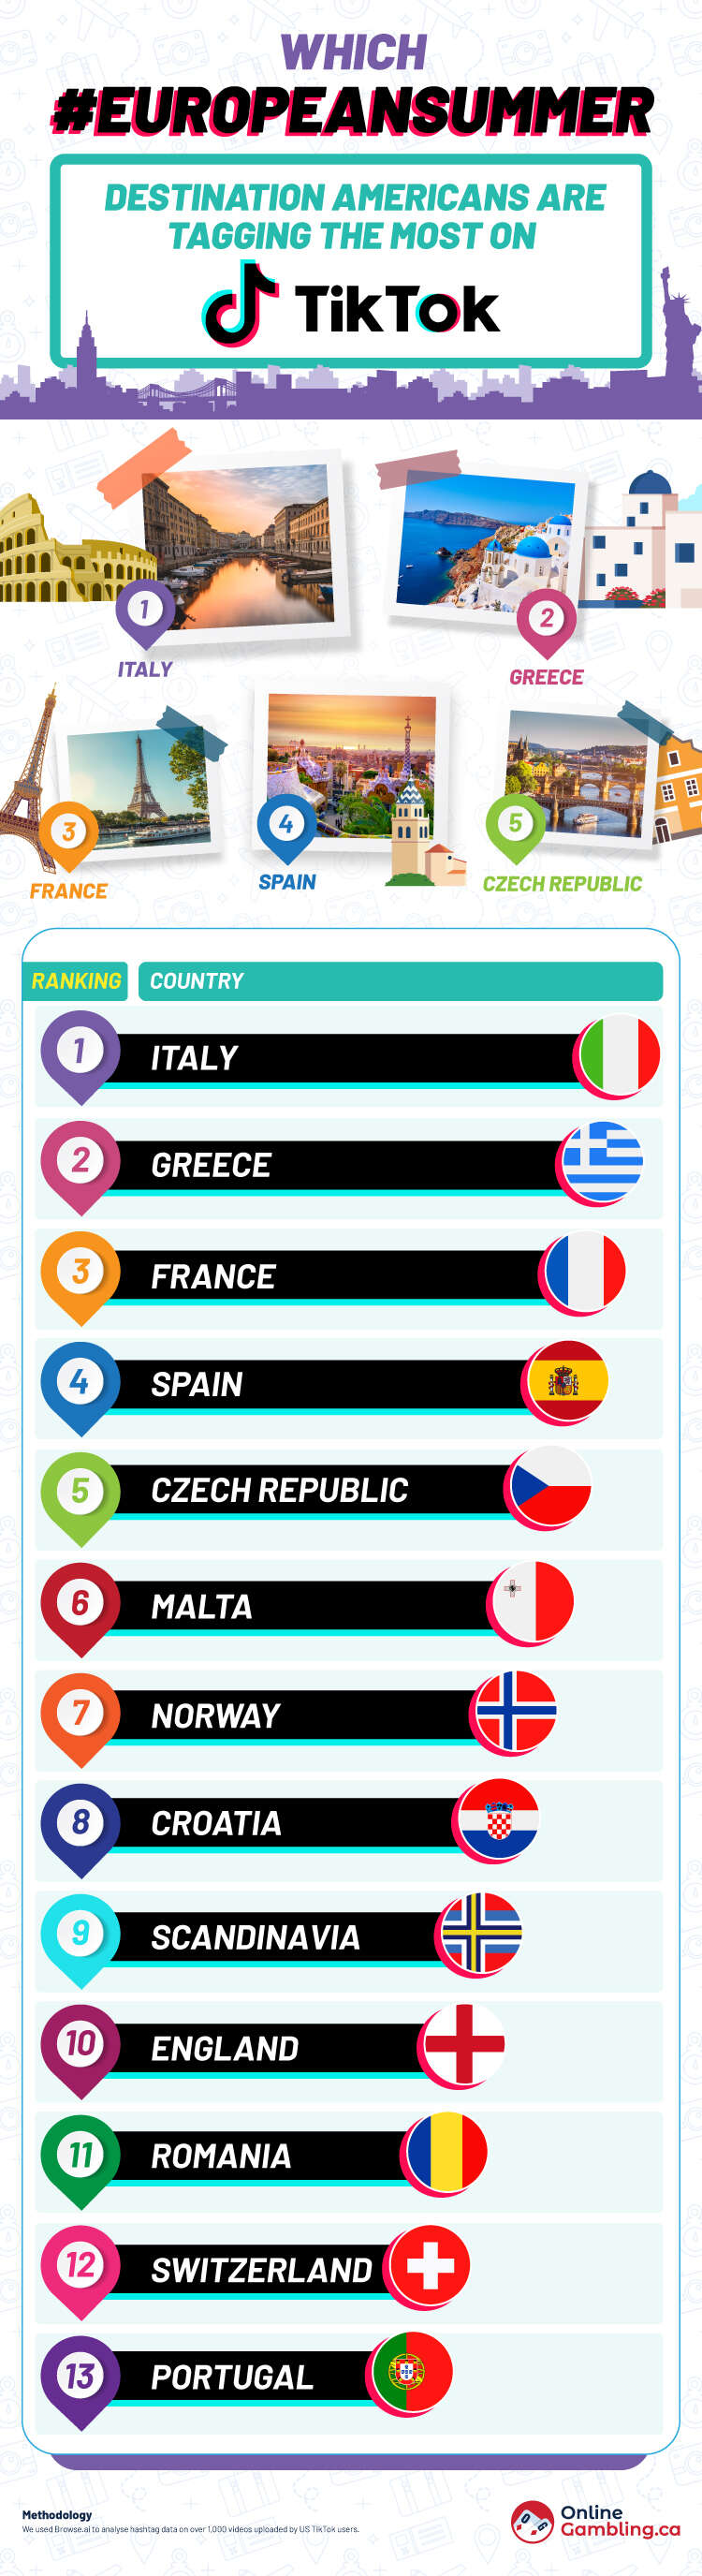 top trending european travel destinations according to tiktok